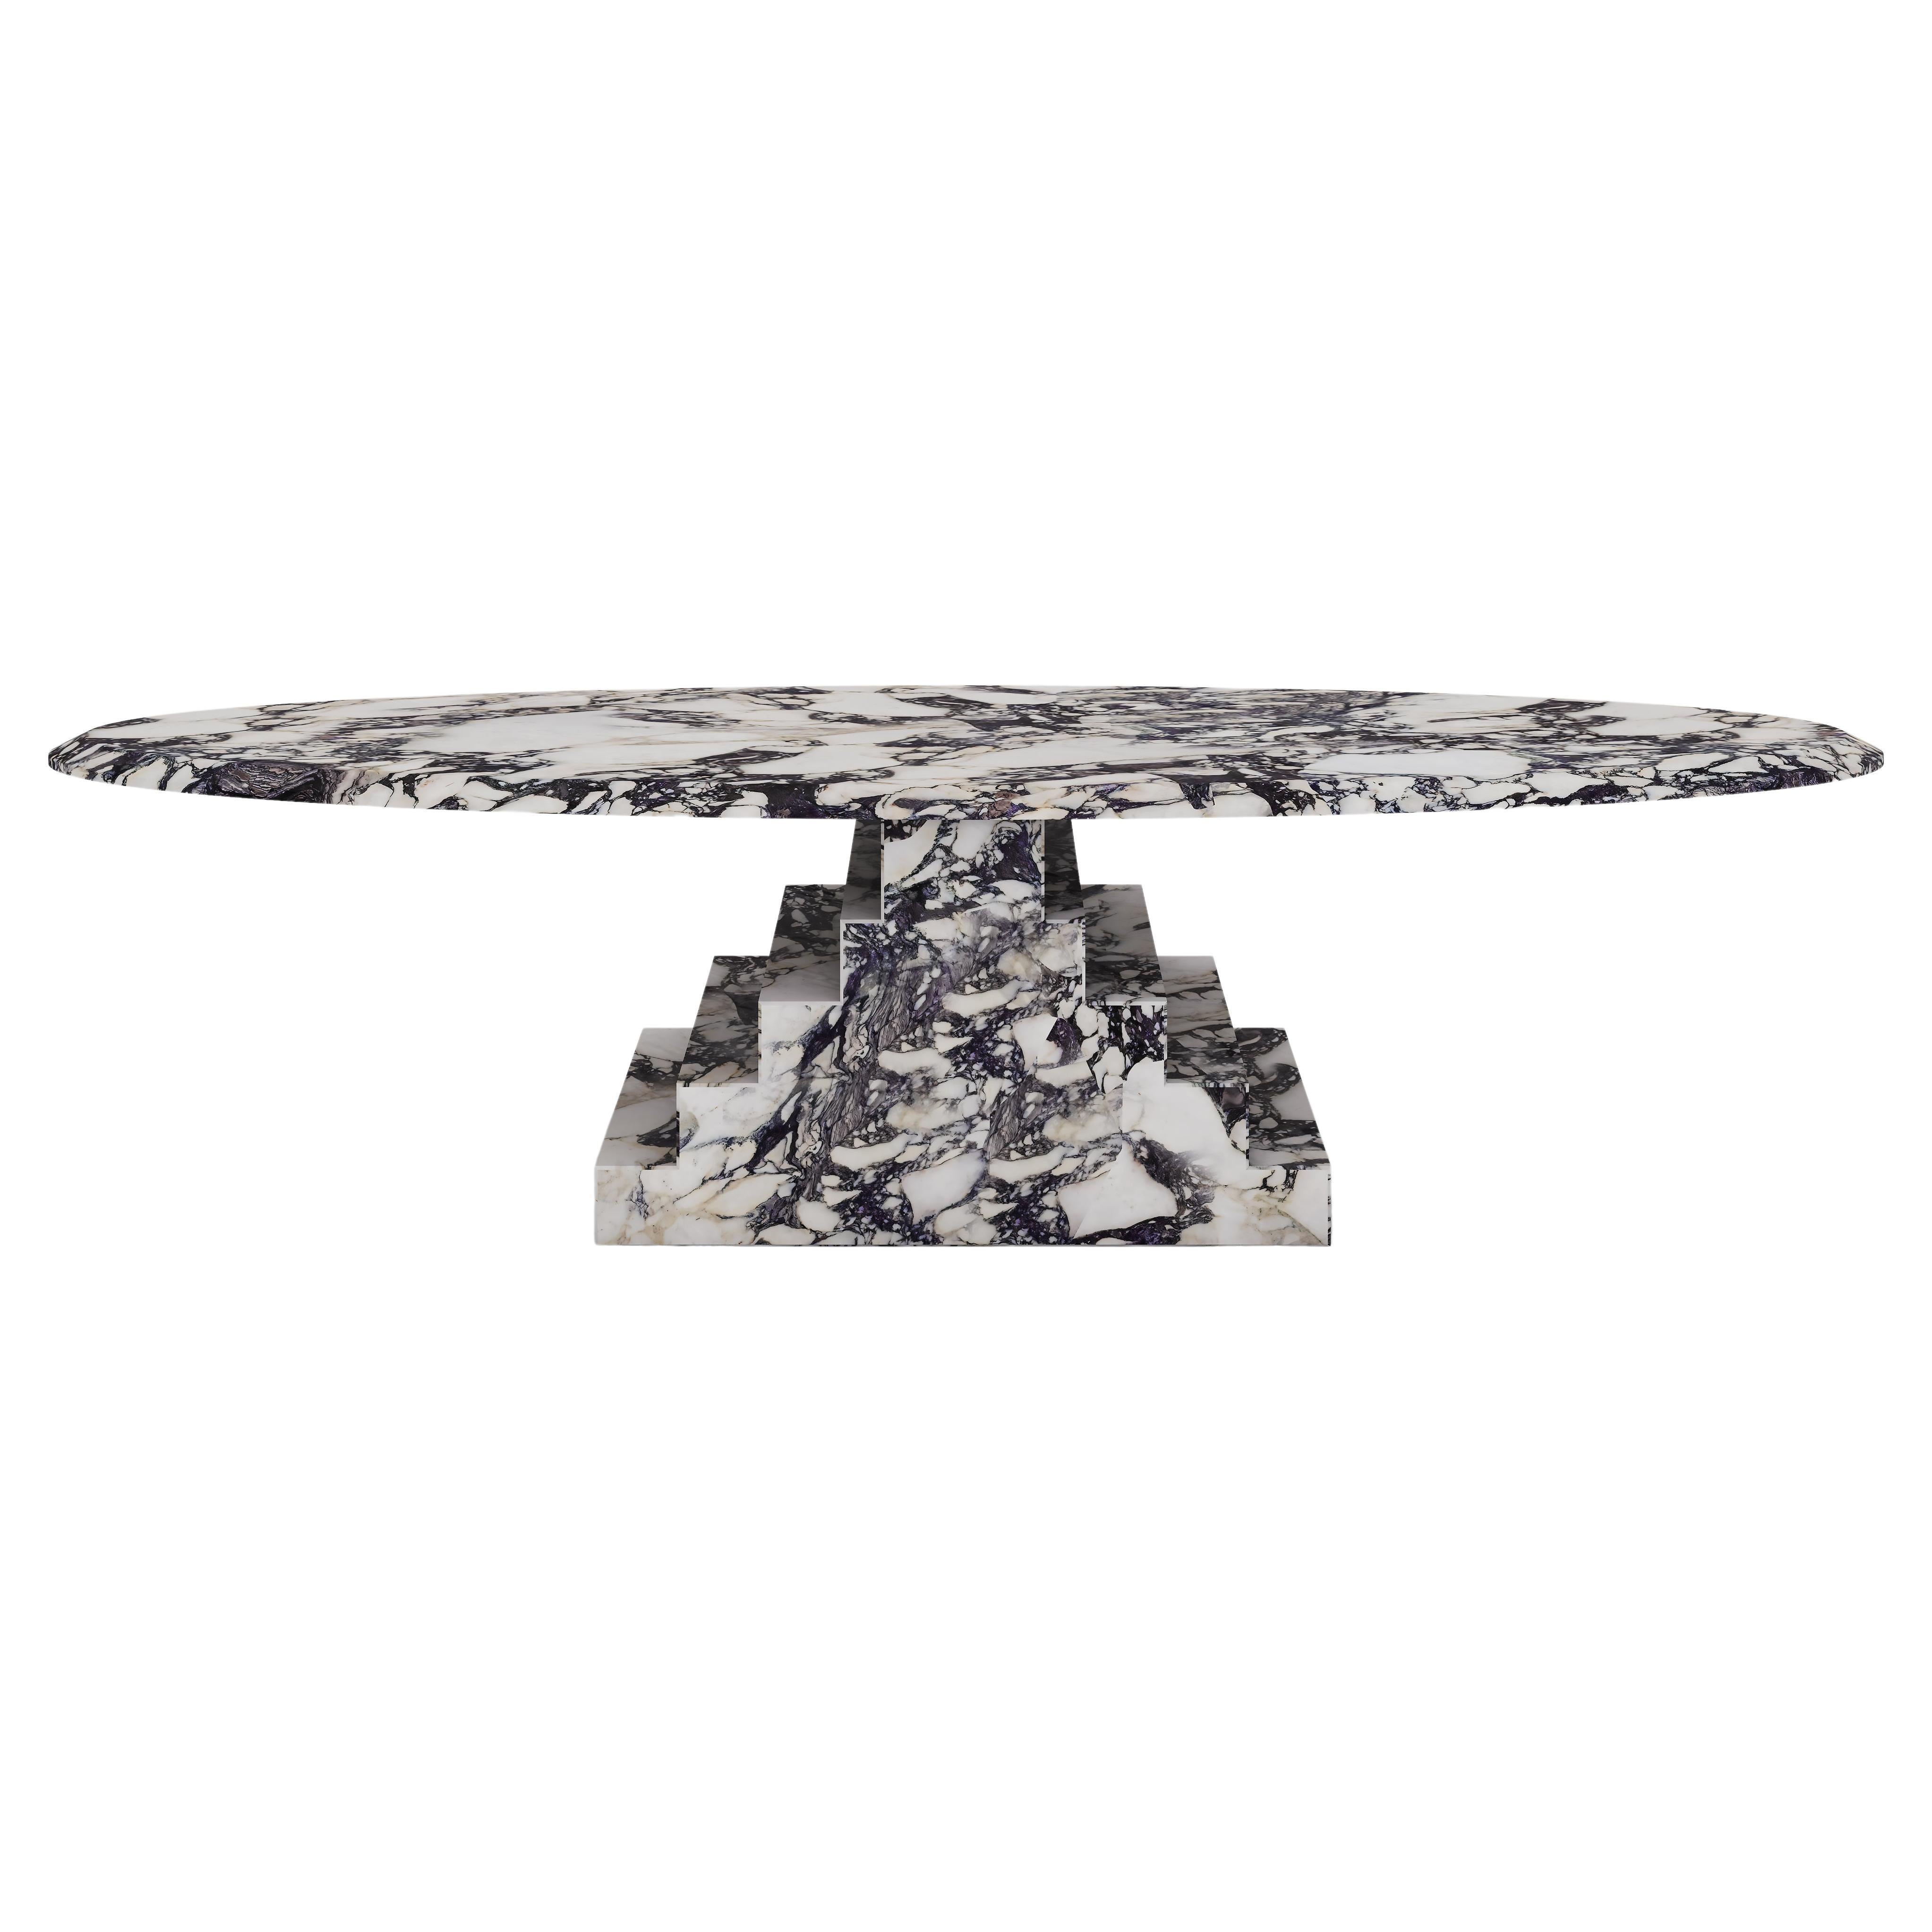  NORDST NIKO Coffee Table, Italian Calacatta Marble, Danish Modern Design, New